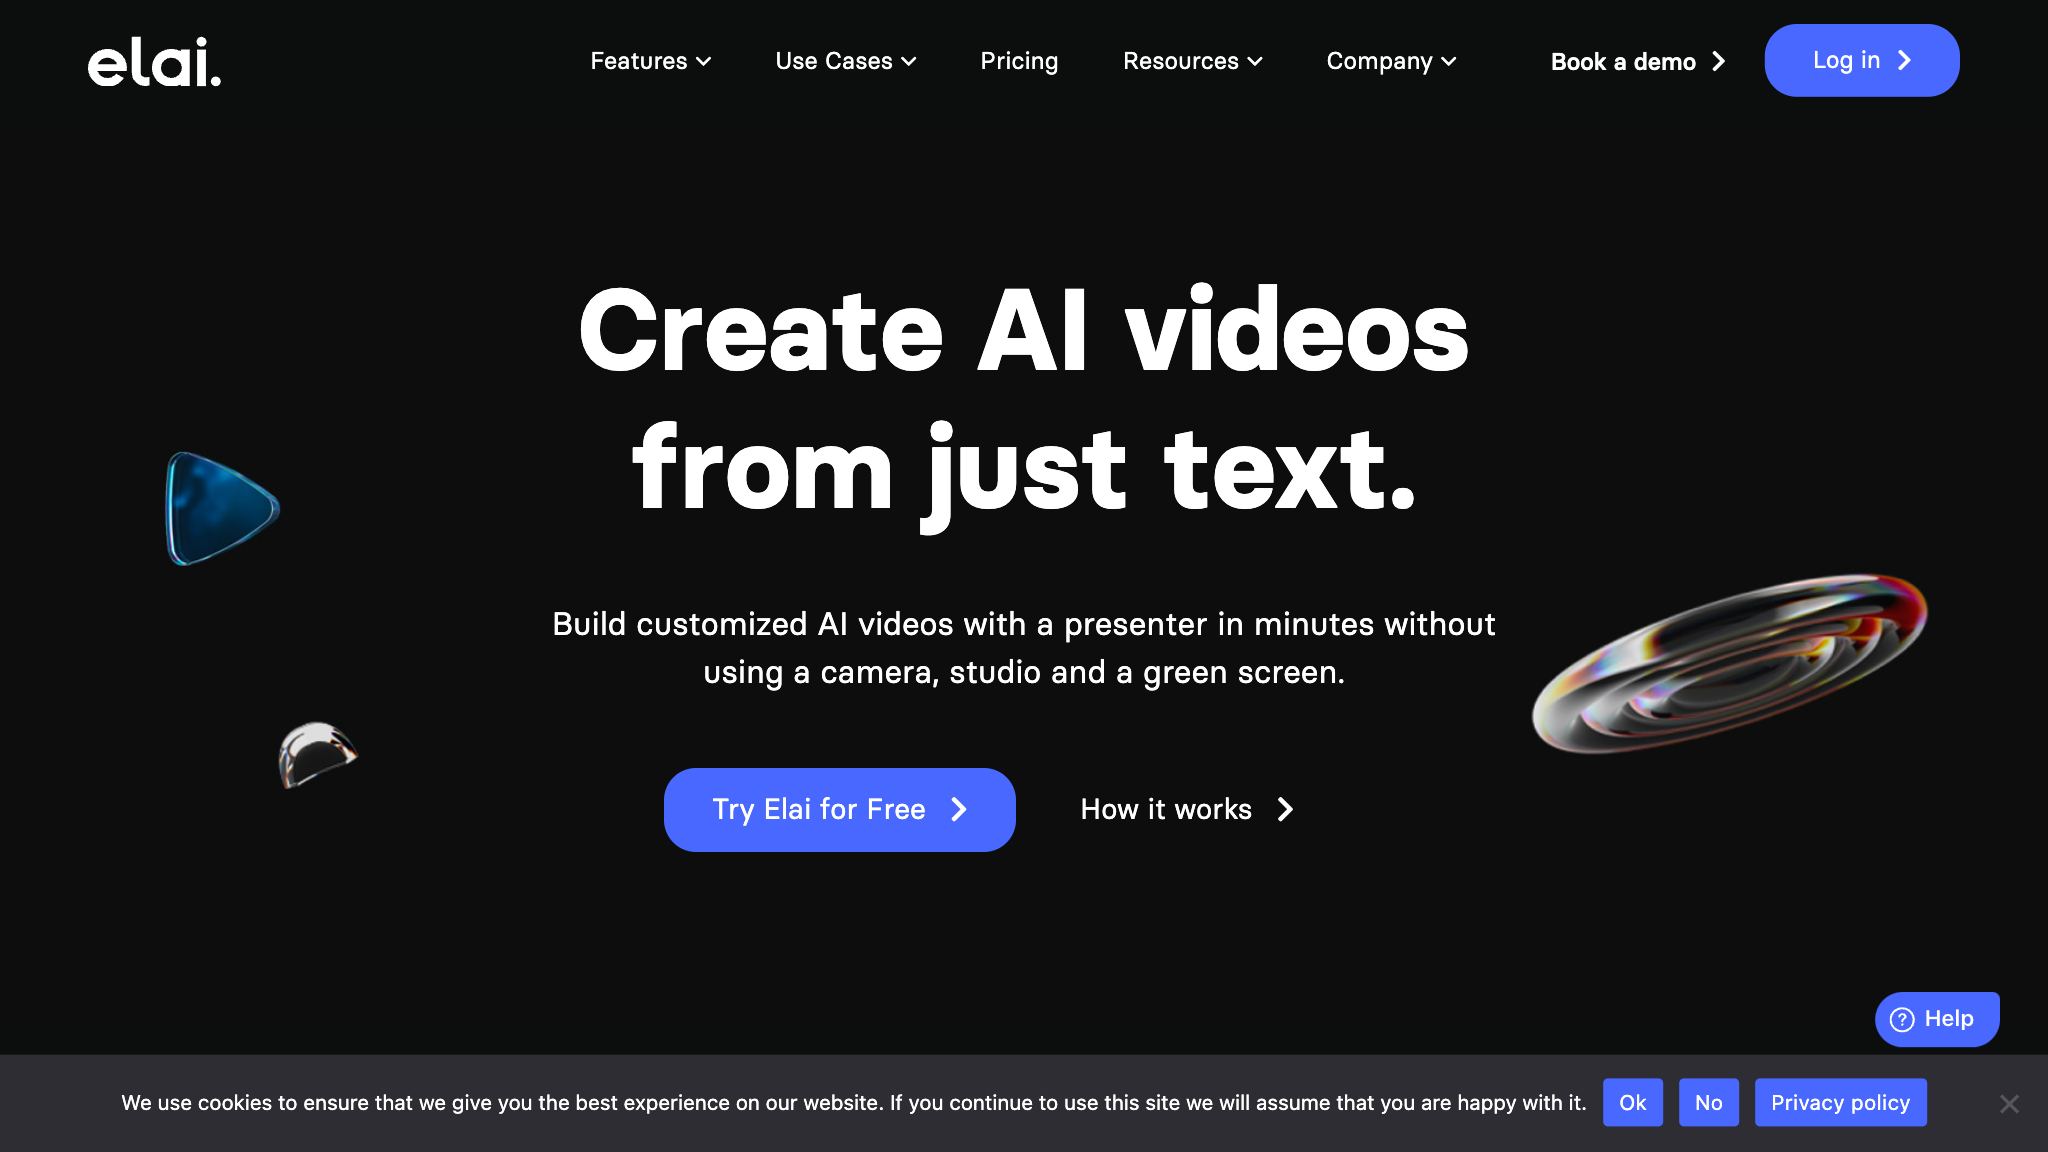 Elai - Create AI videos from just text - Appndo